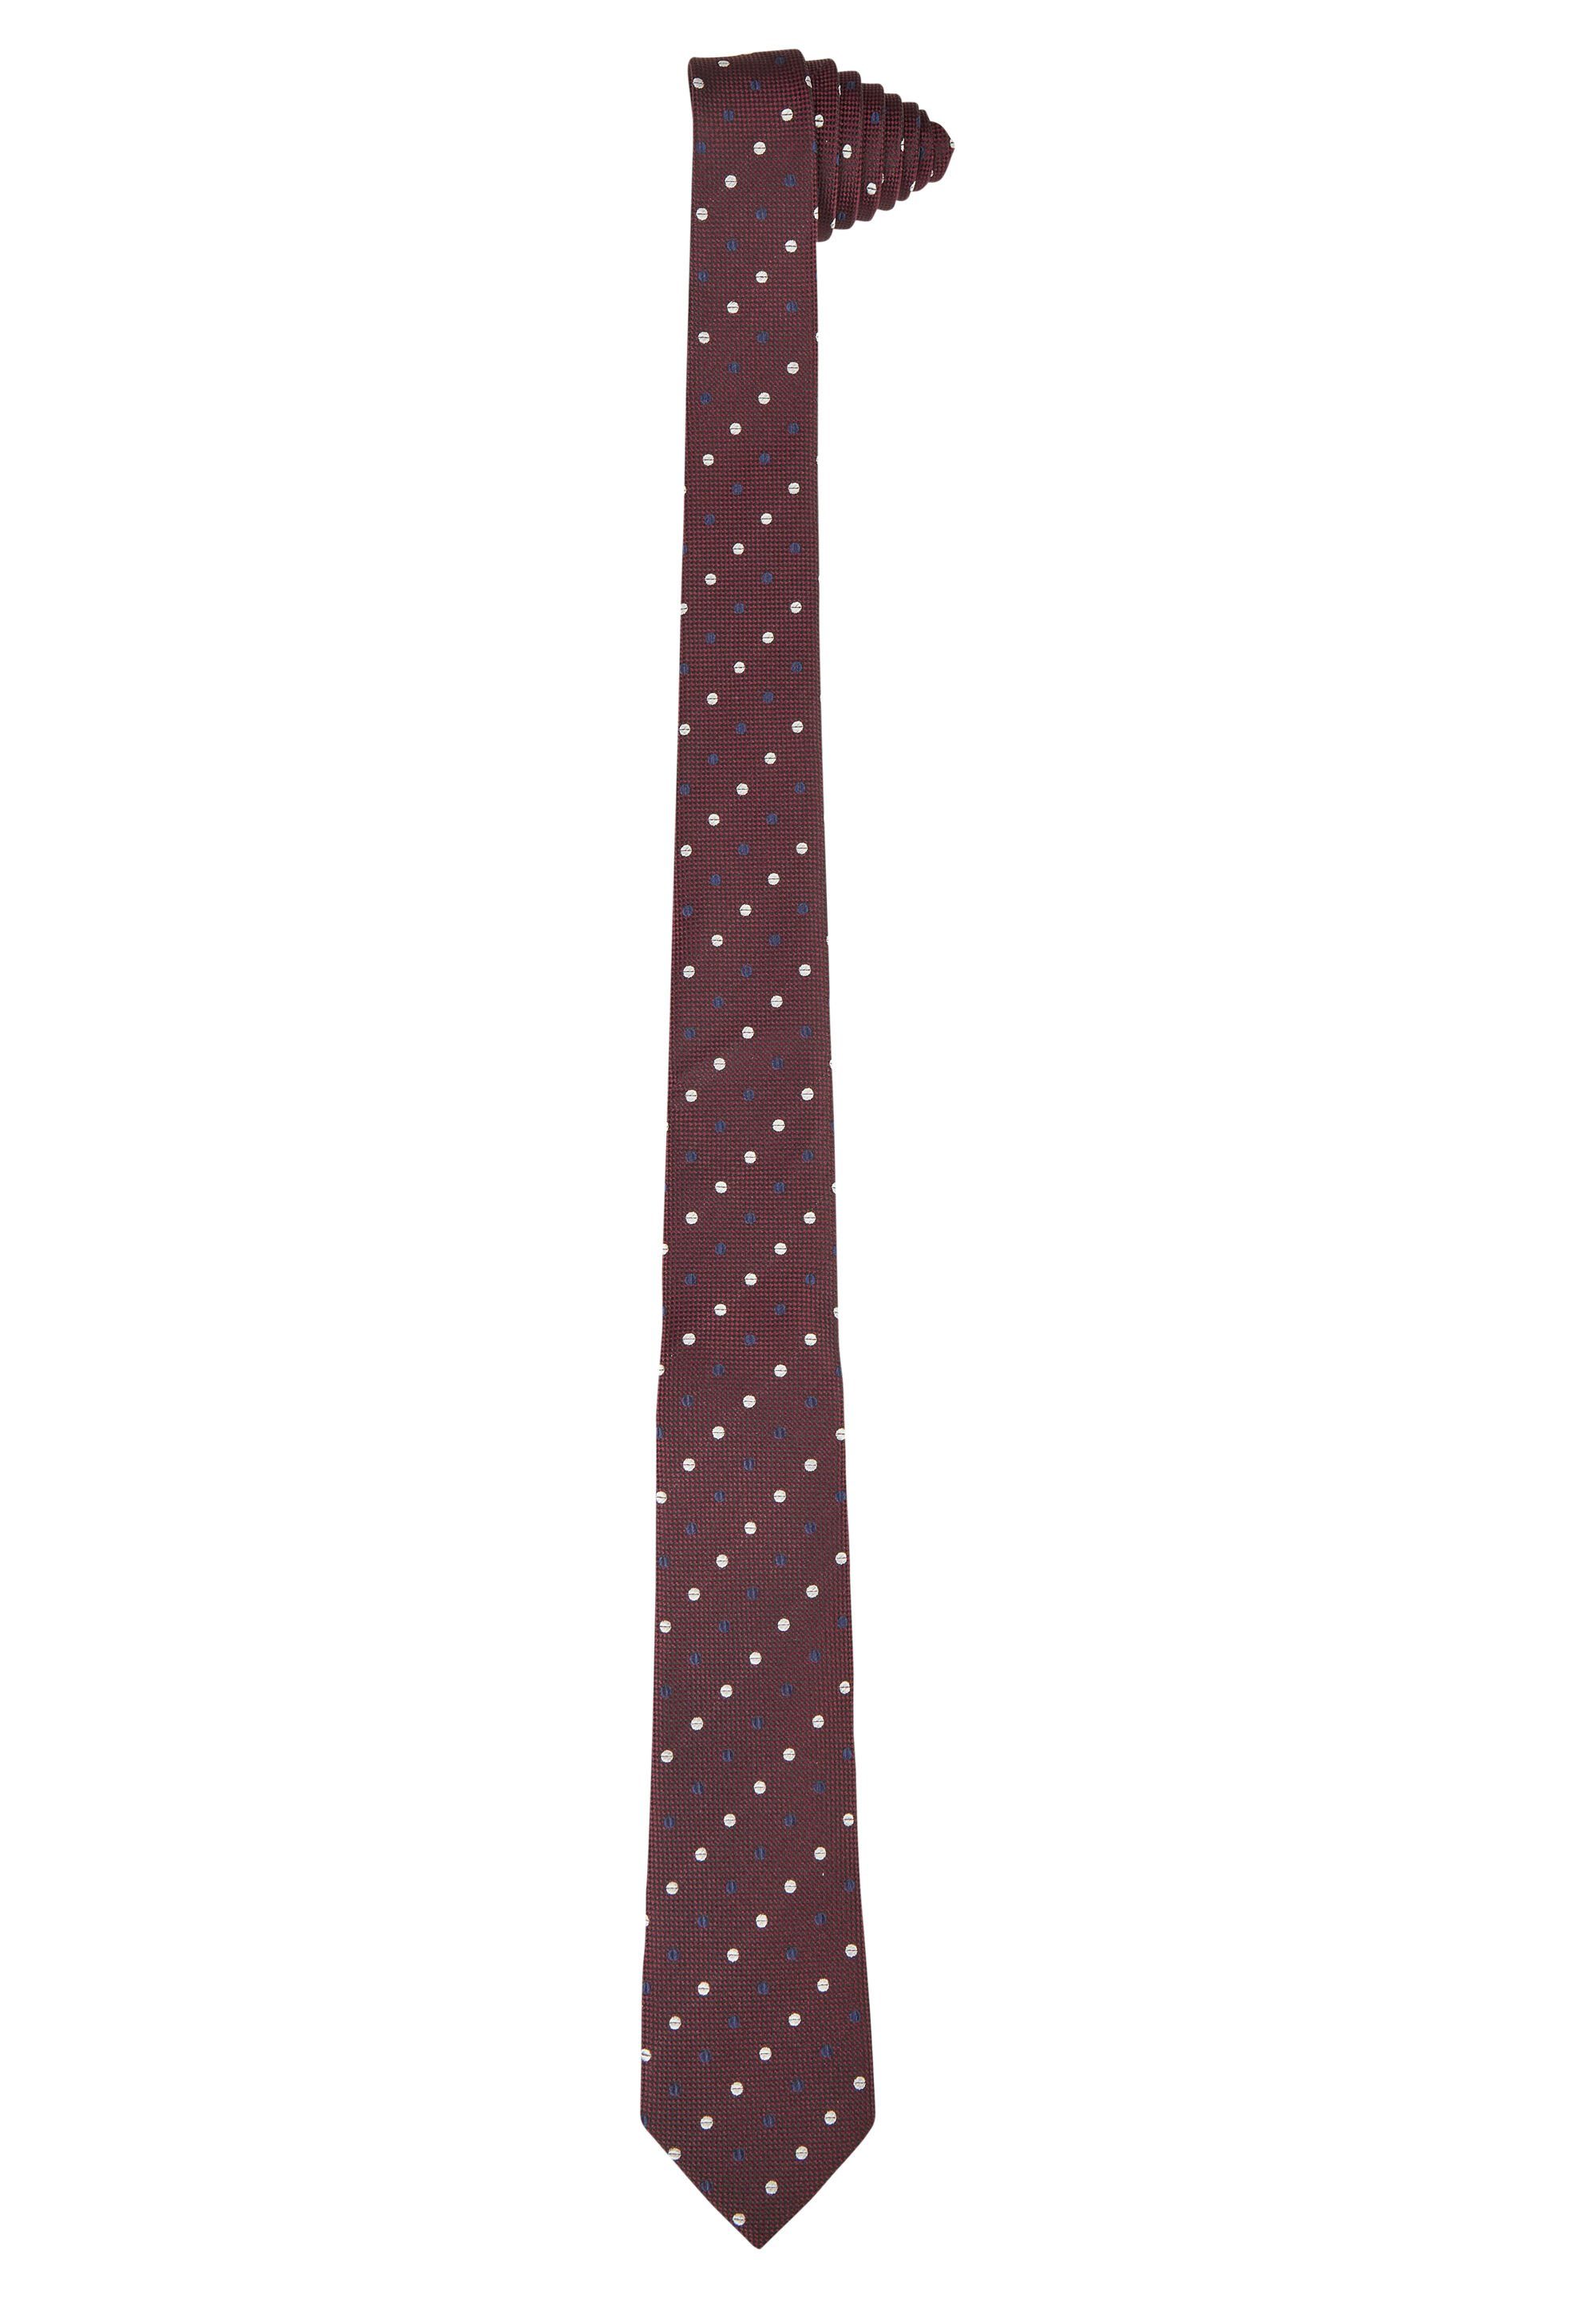 PARIS mit modernem oxblood Krawatte Muster HECHTER